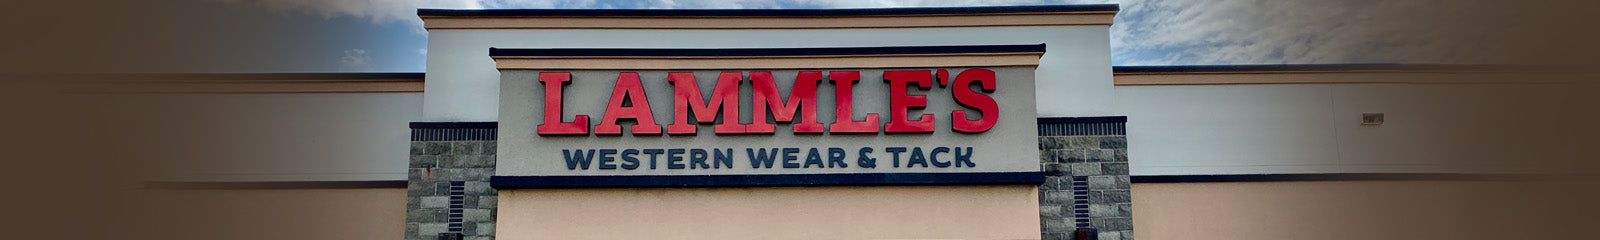 Lammles Western Wear Reviews  Read Customer Service Reviews of lammles.com